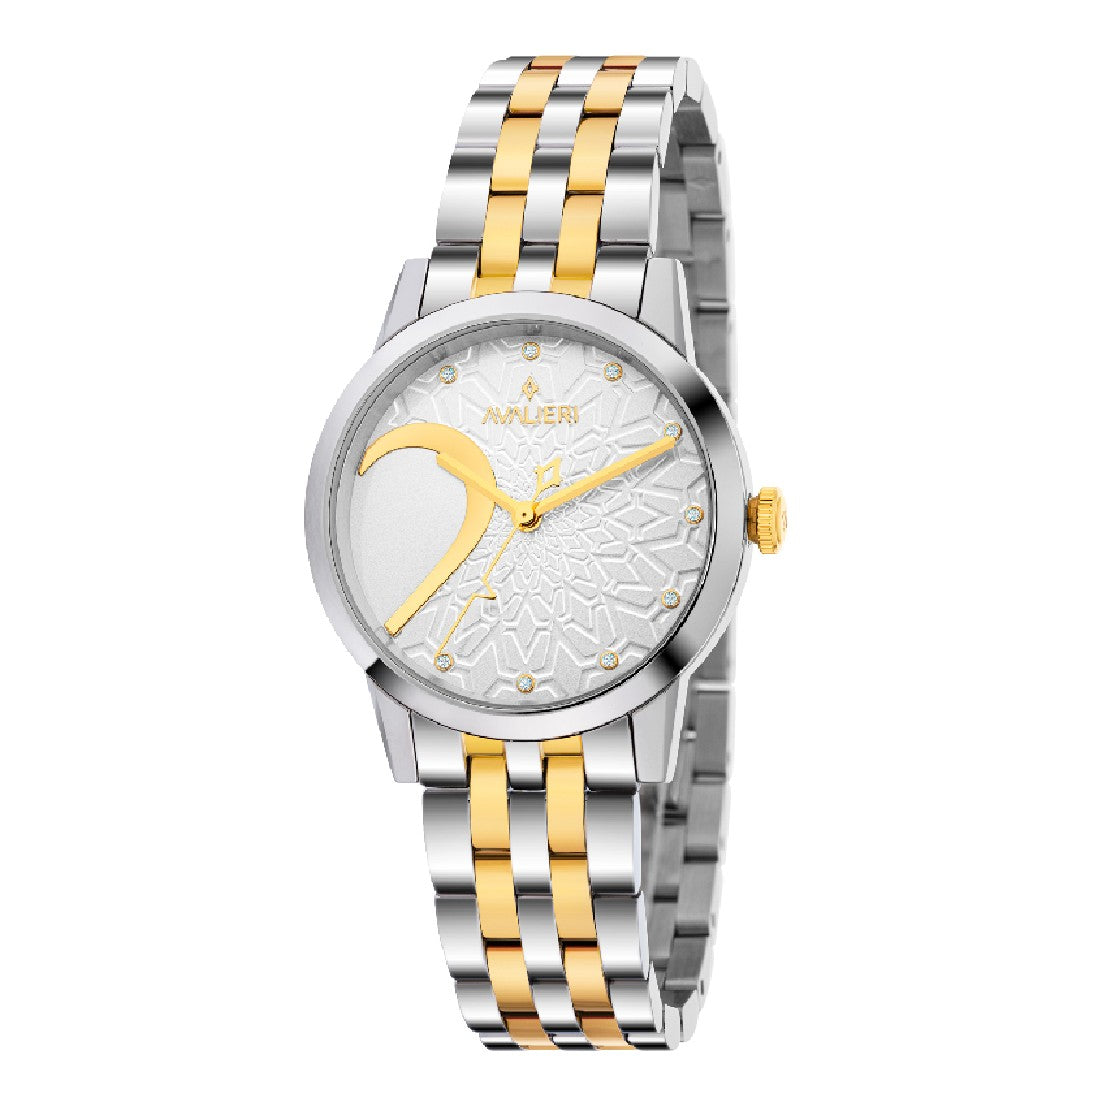 Avalieri Women's Quartz Watch Silver Dial - AV-2322B